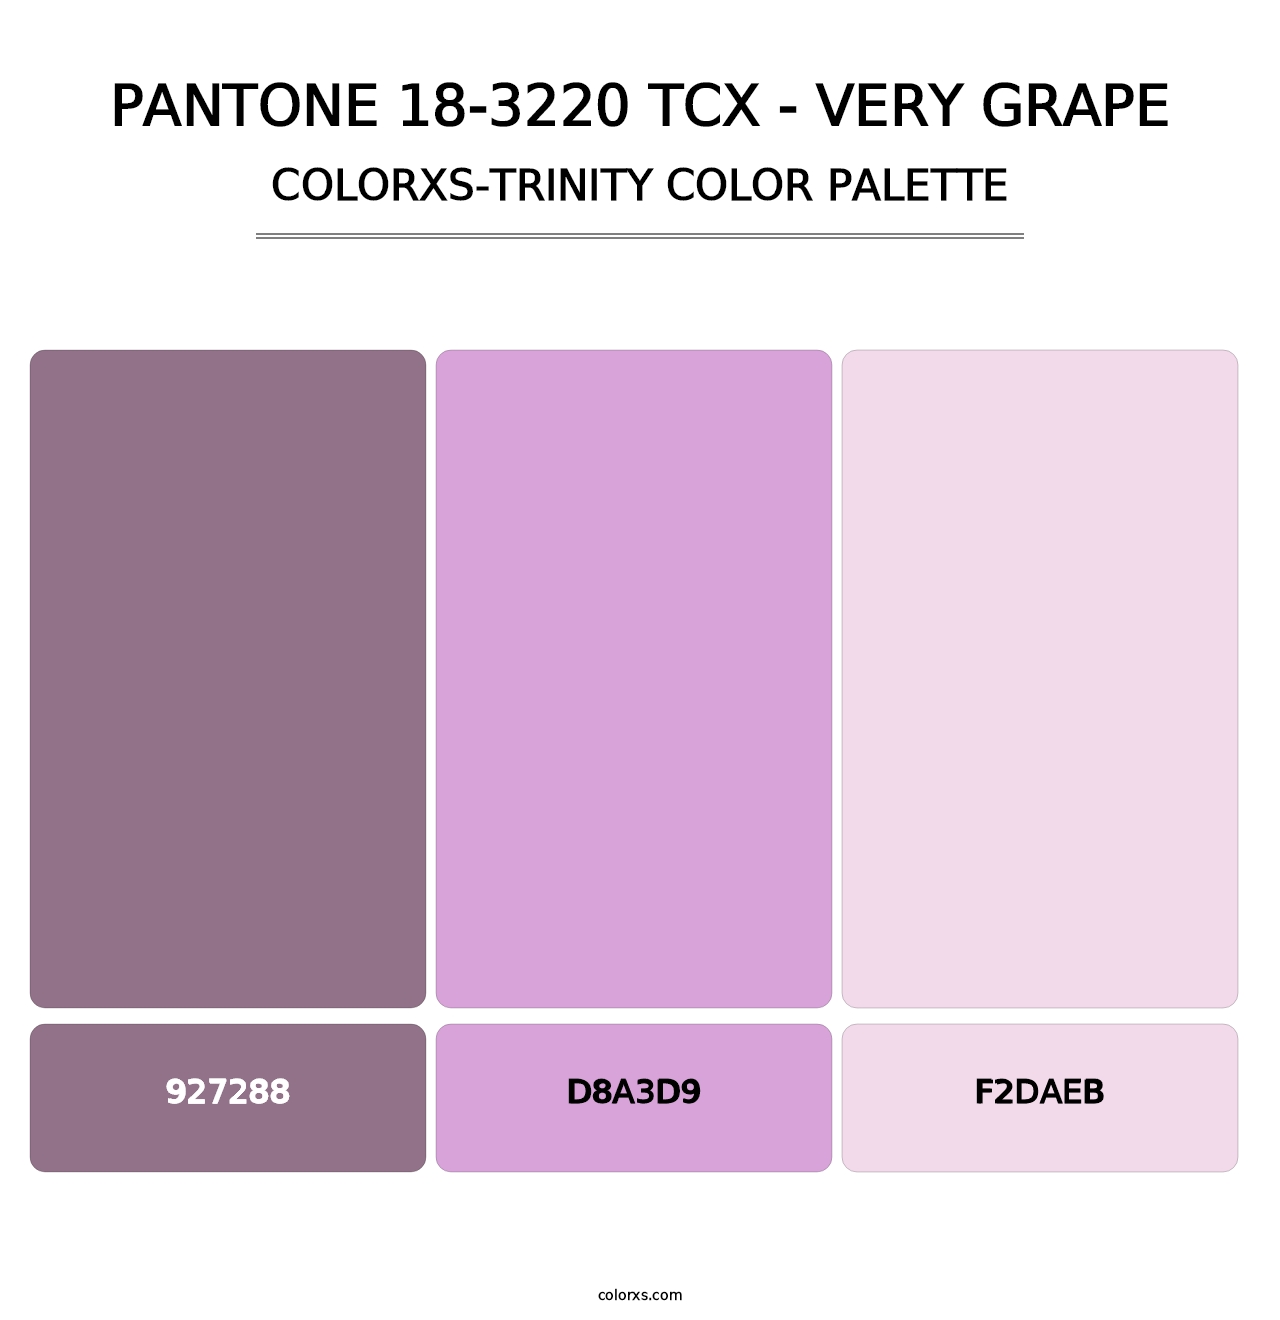 PANTONE 18-3220 TCX - Very Grape - Colorxs Trinity Palette